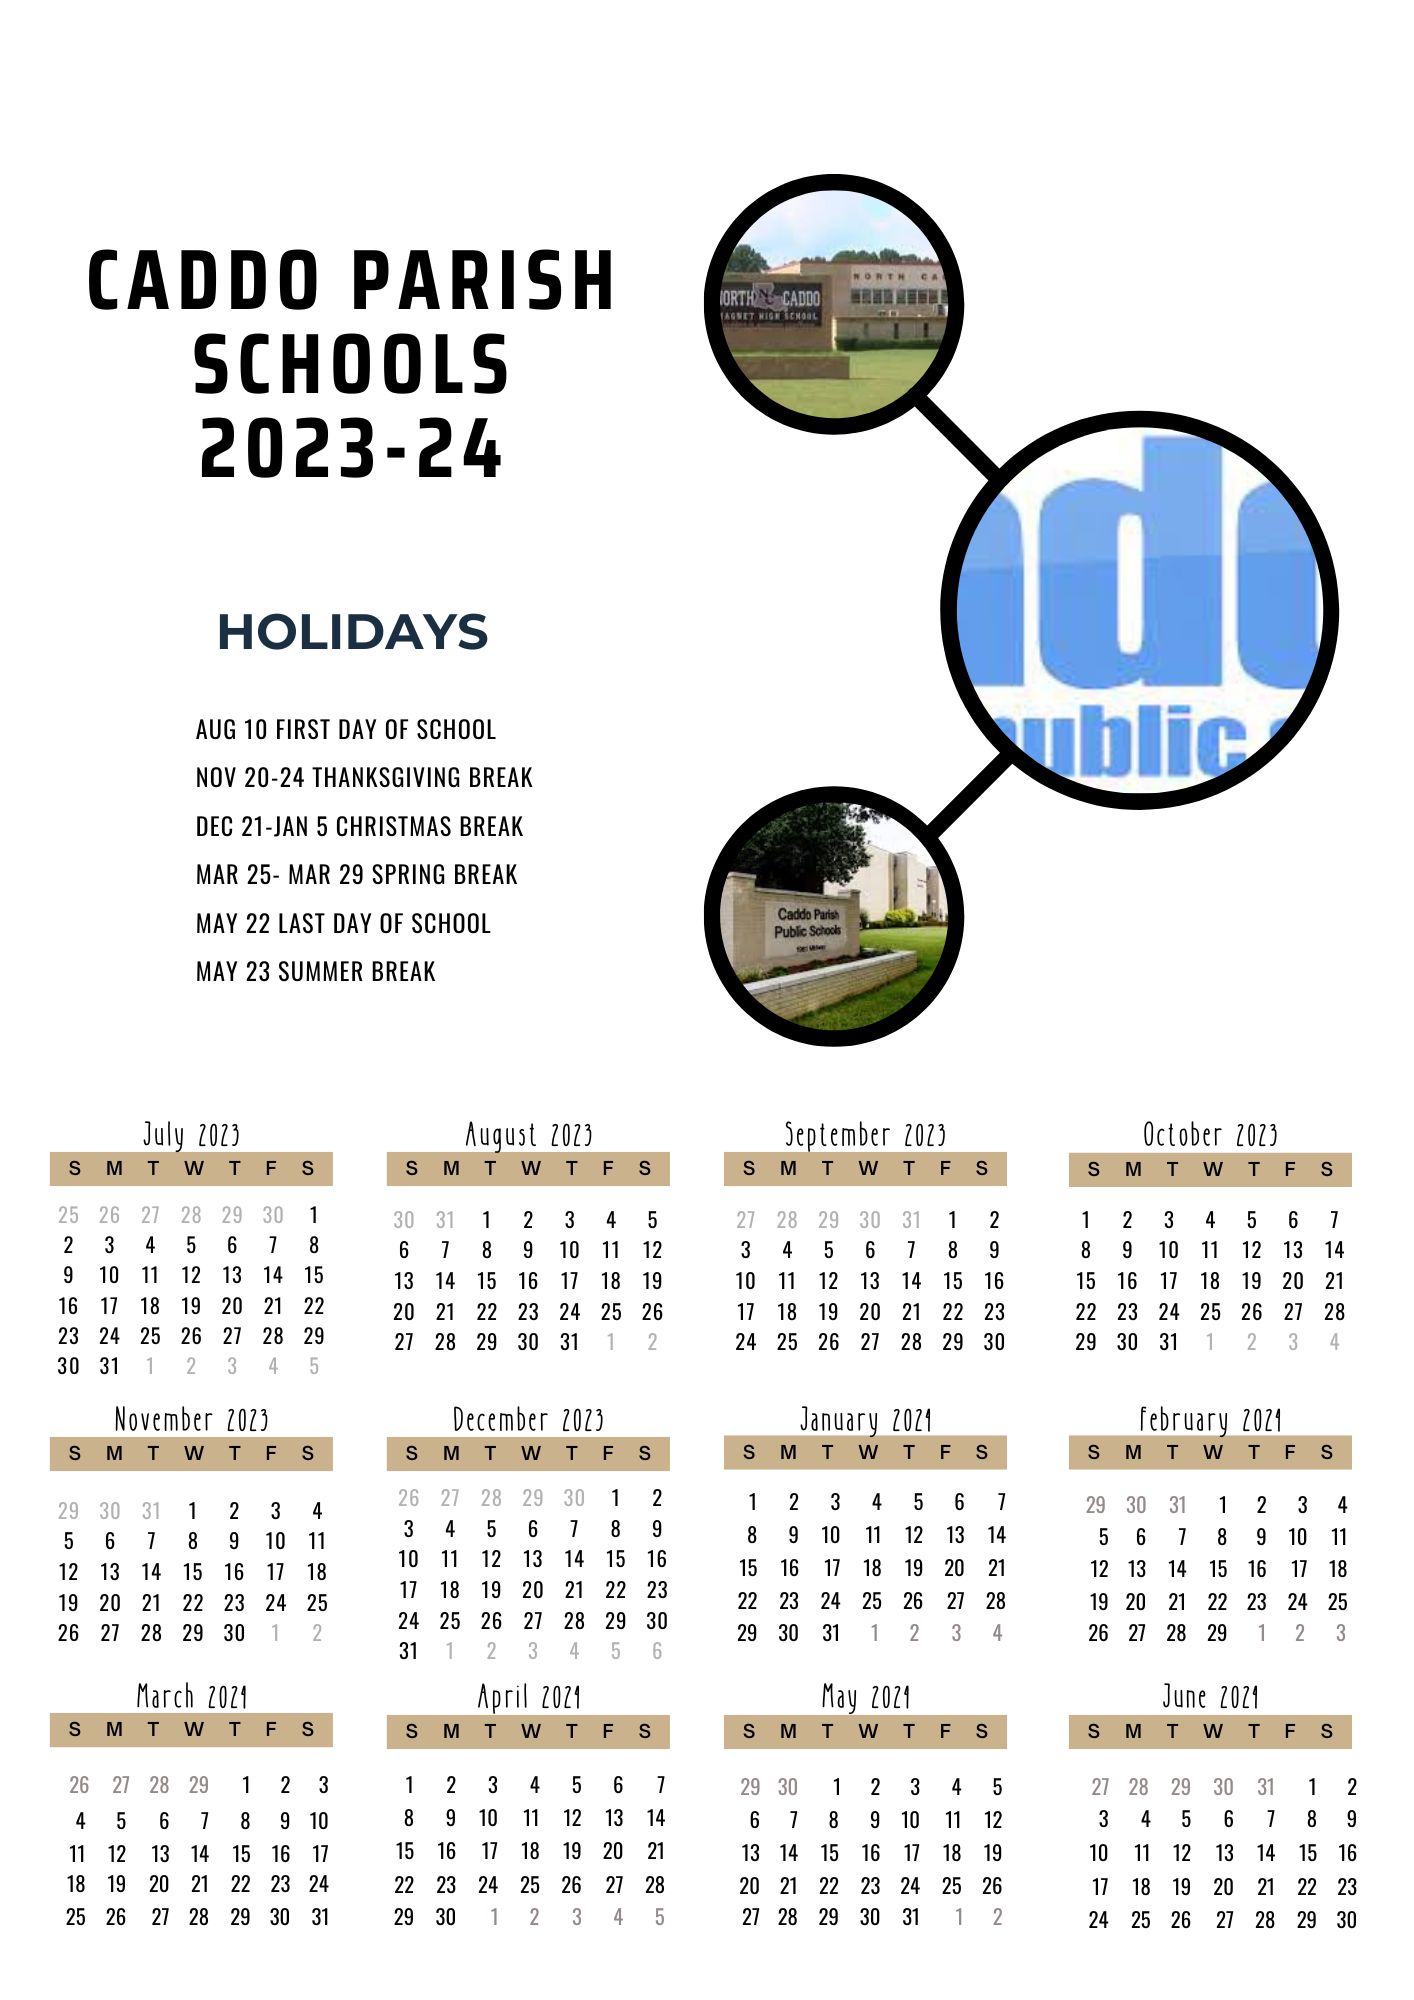 Caddo Parish Schools Calendar Holidays 2023-2024